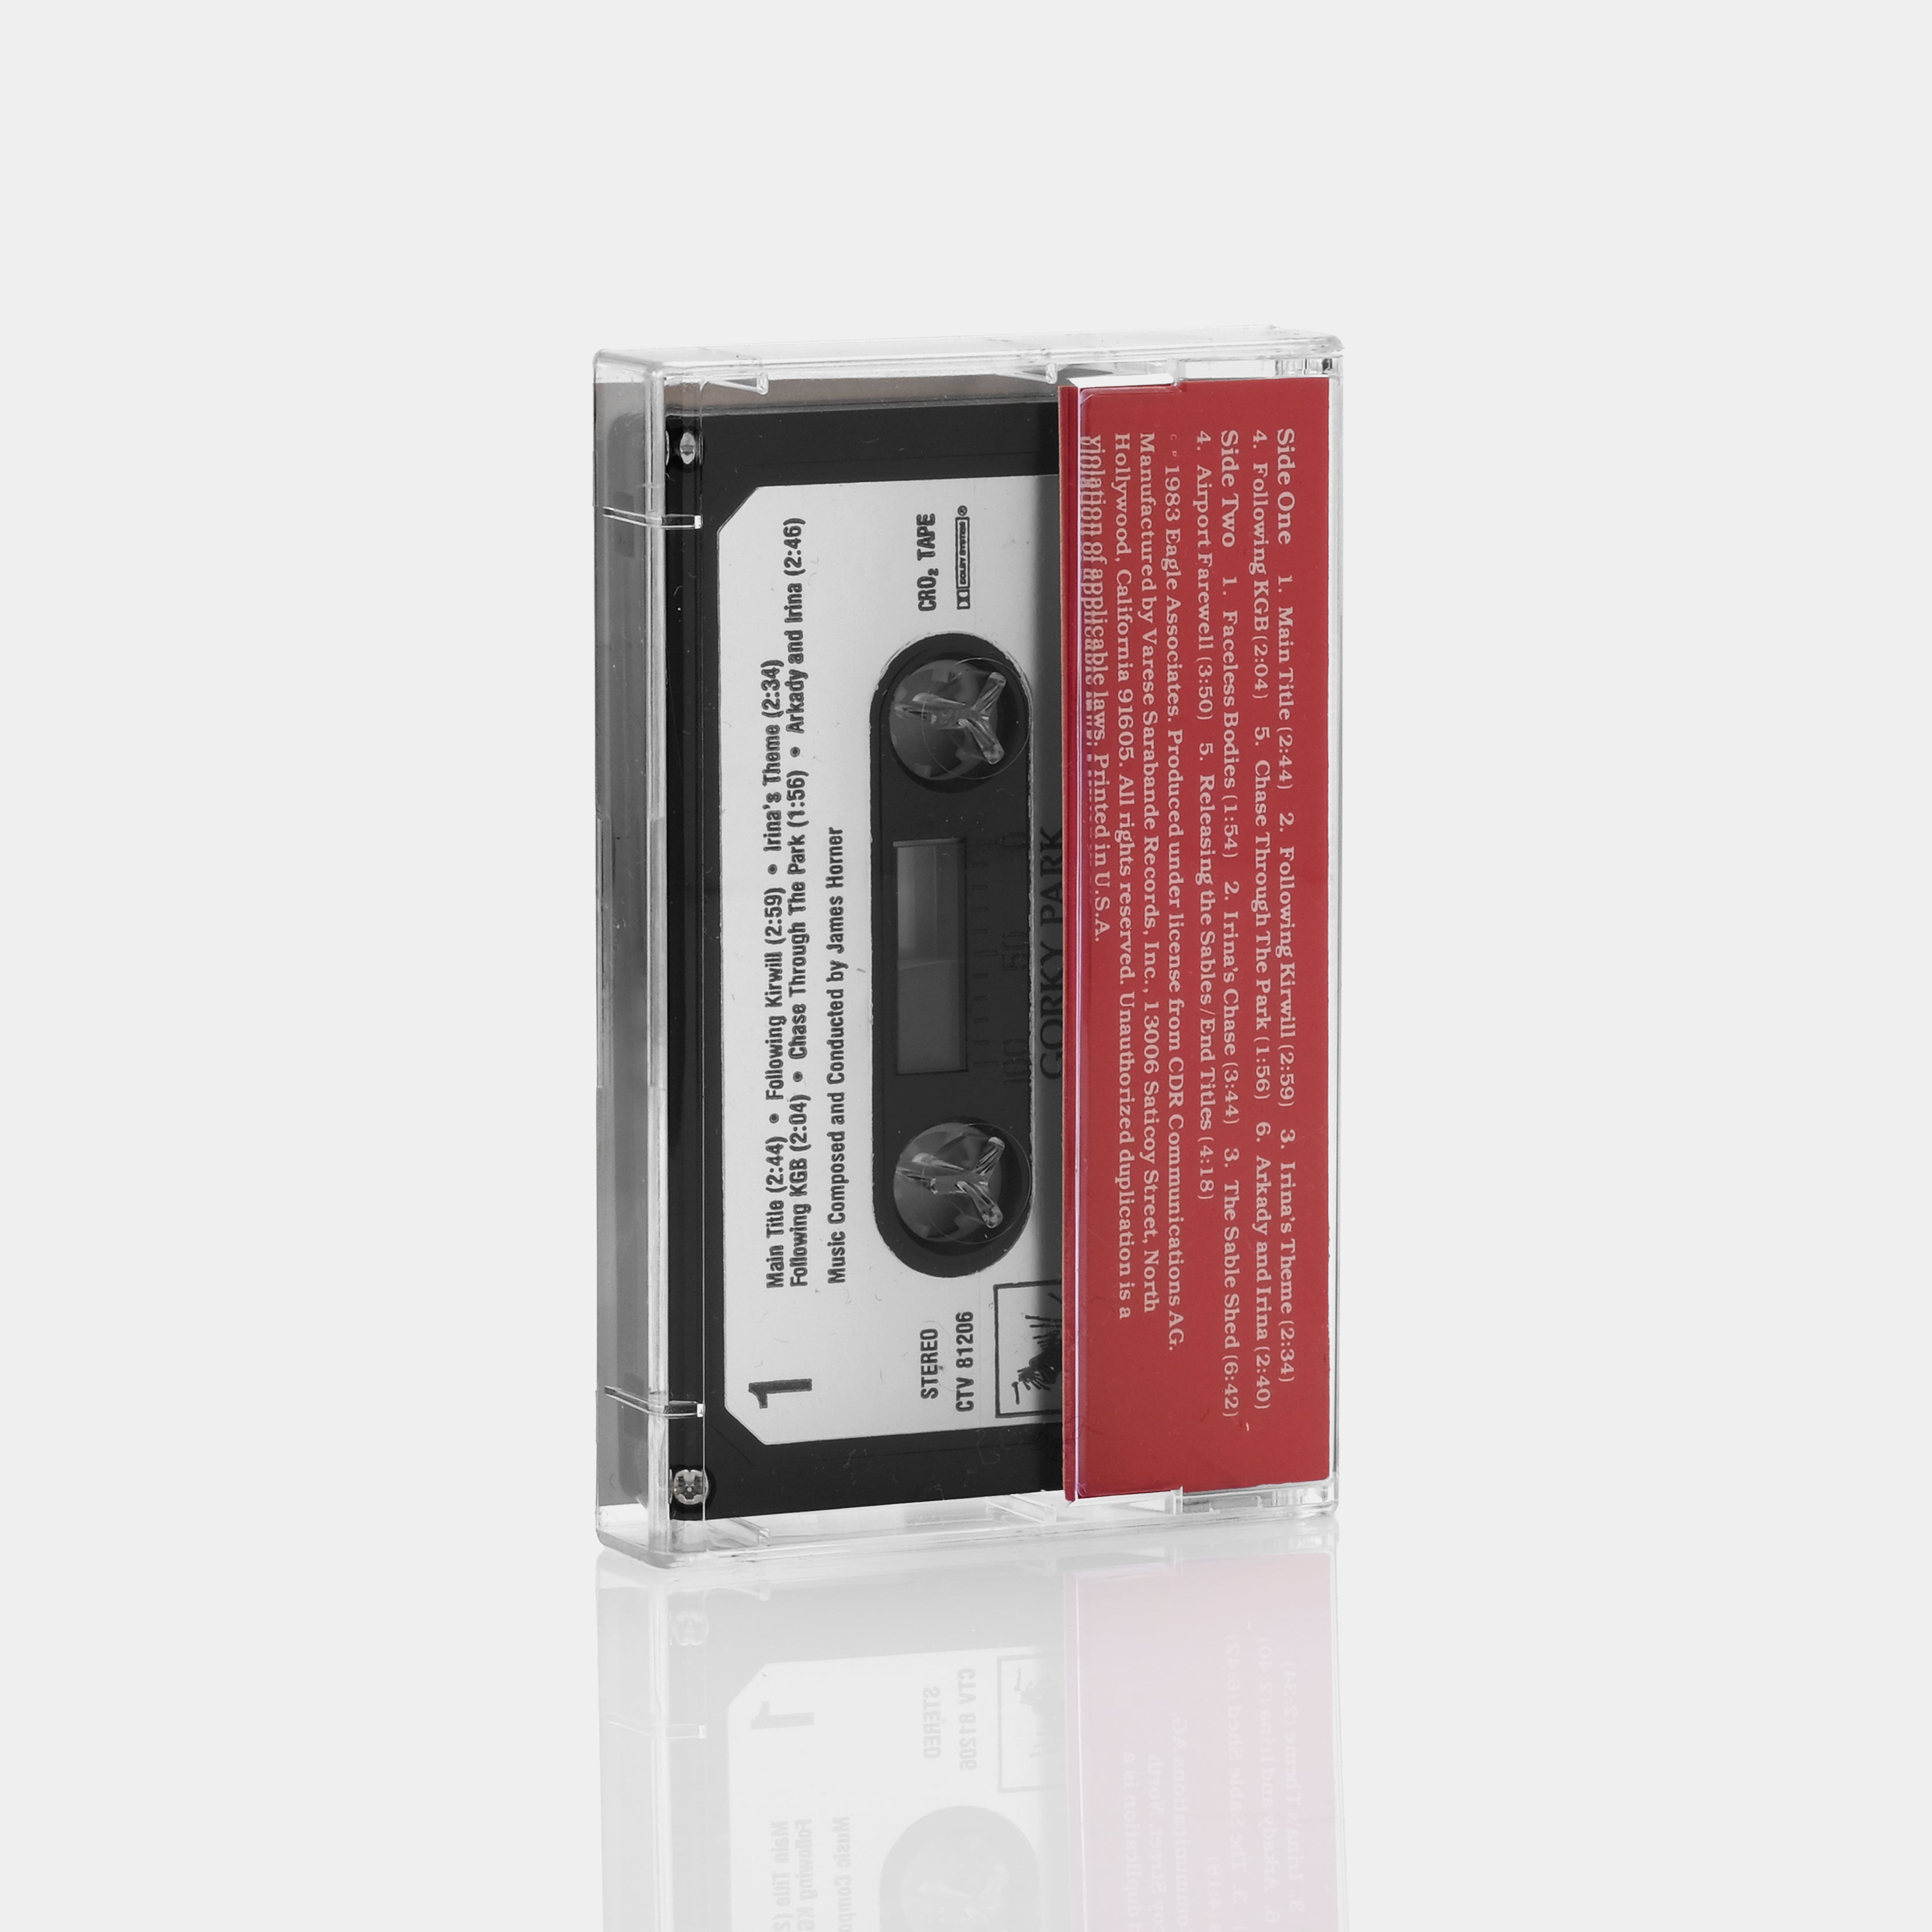 Gorky Park (Original Motion Picture Soundtrack) Cassette Tape